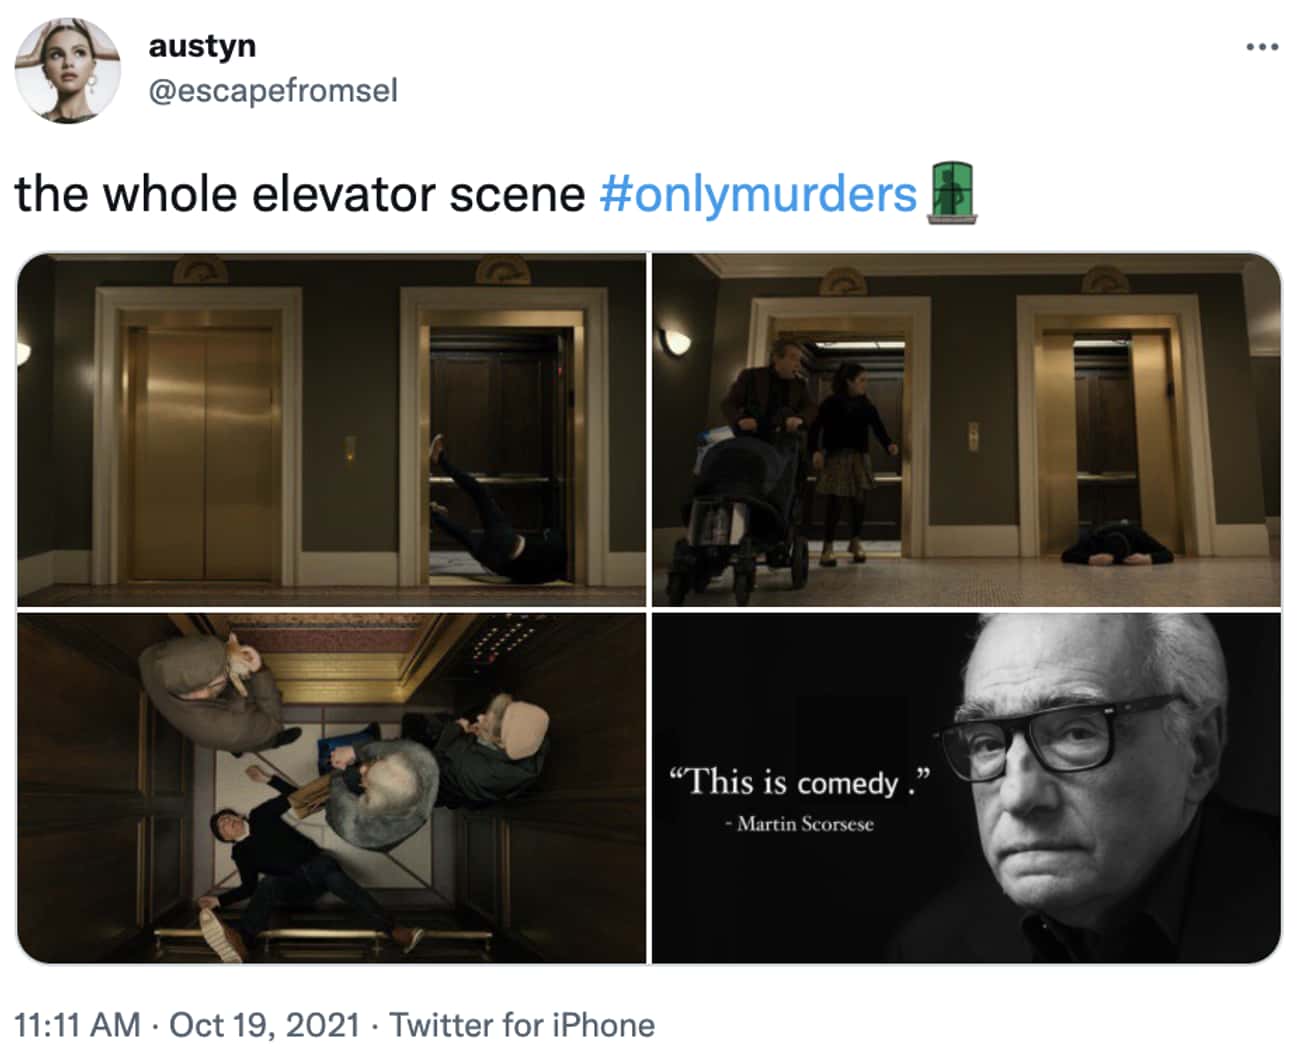 The Whole Elevator Scene